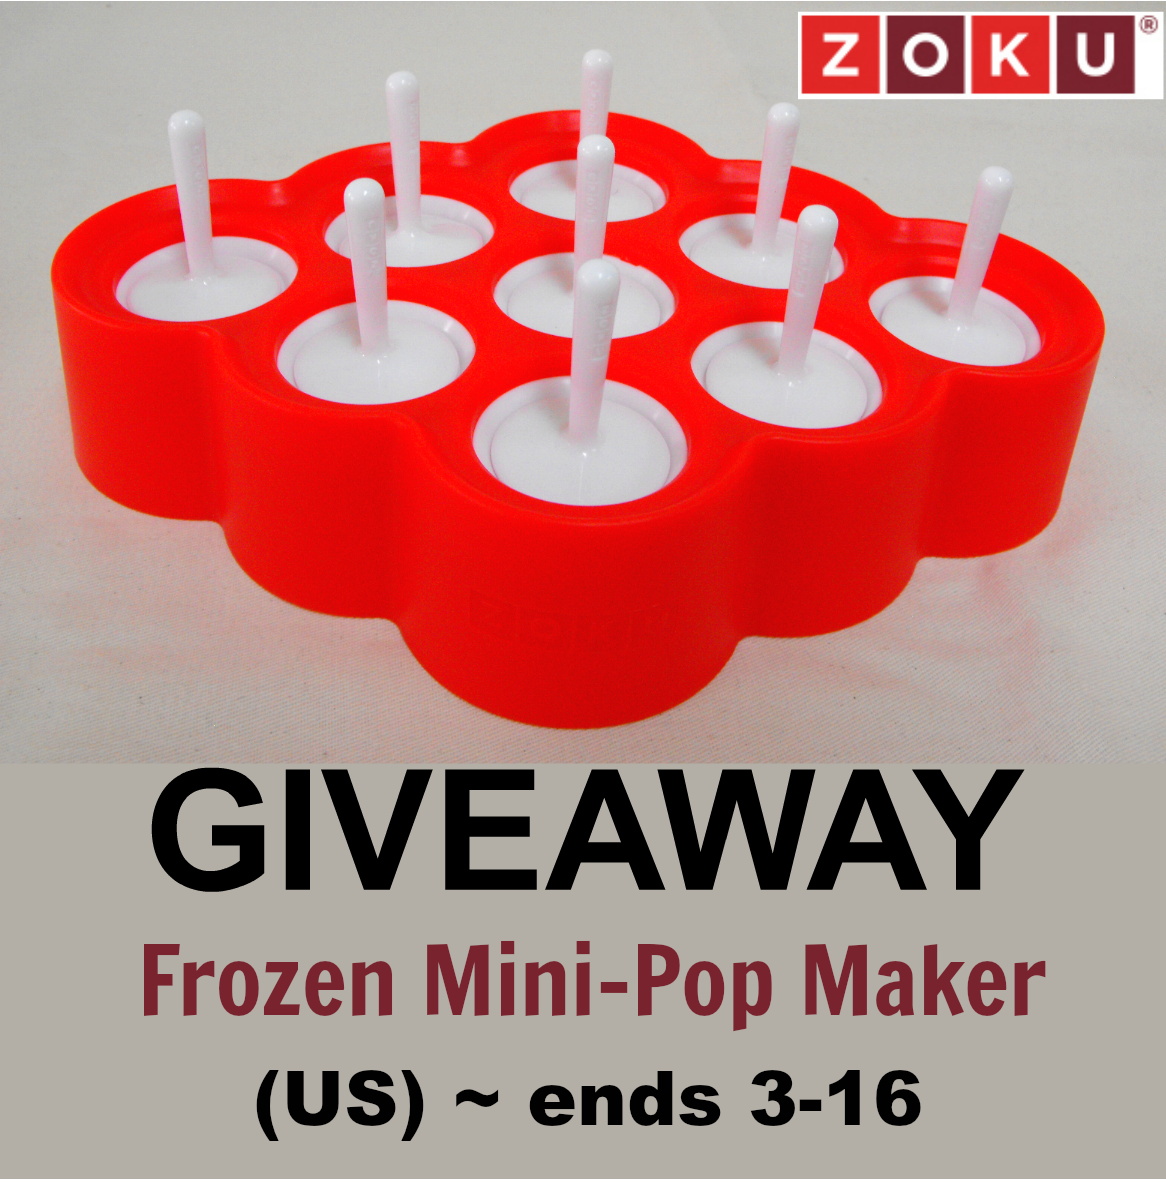 Zoku - Mini Pop Molds